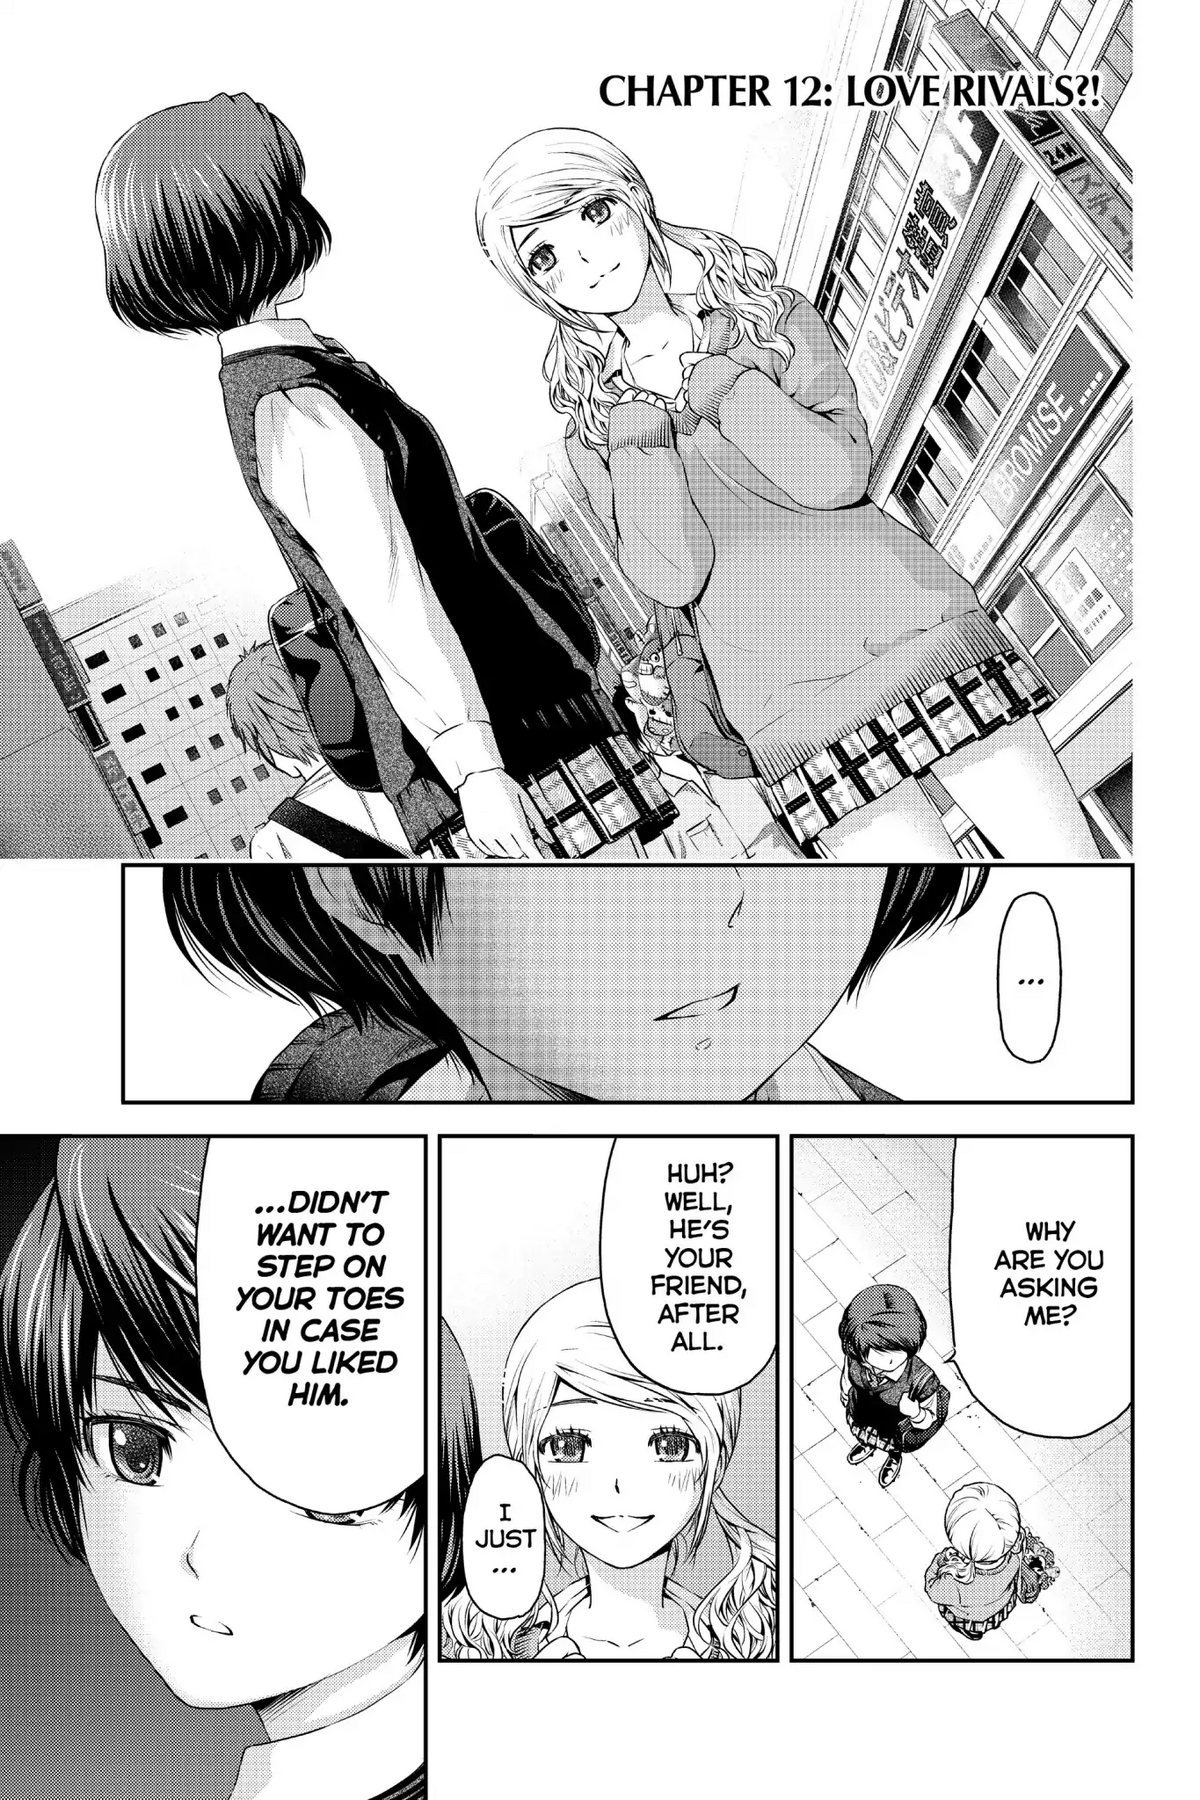 Domestic Girlfriend Volume 10 (Domestic na Kanojo) - Manga Store 